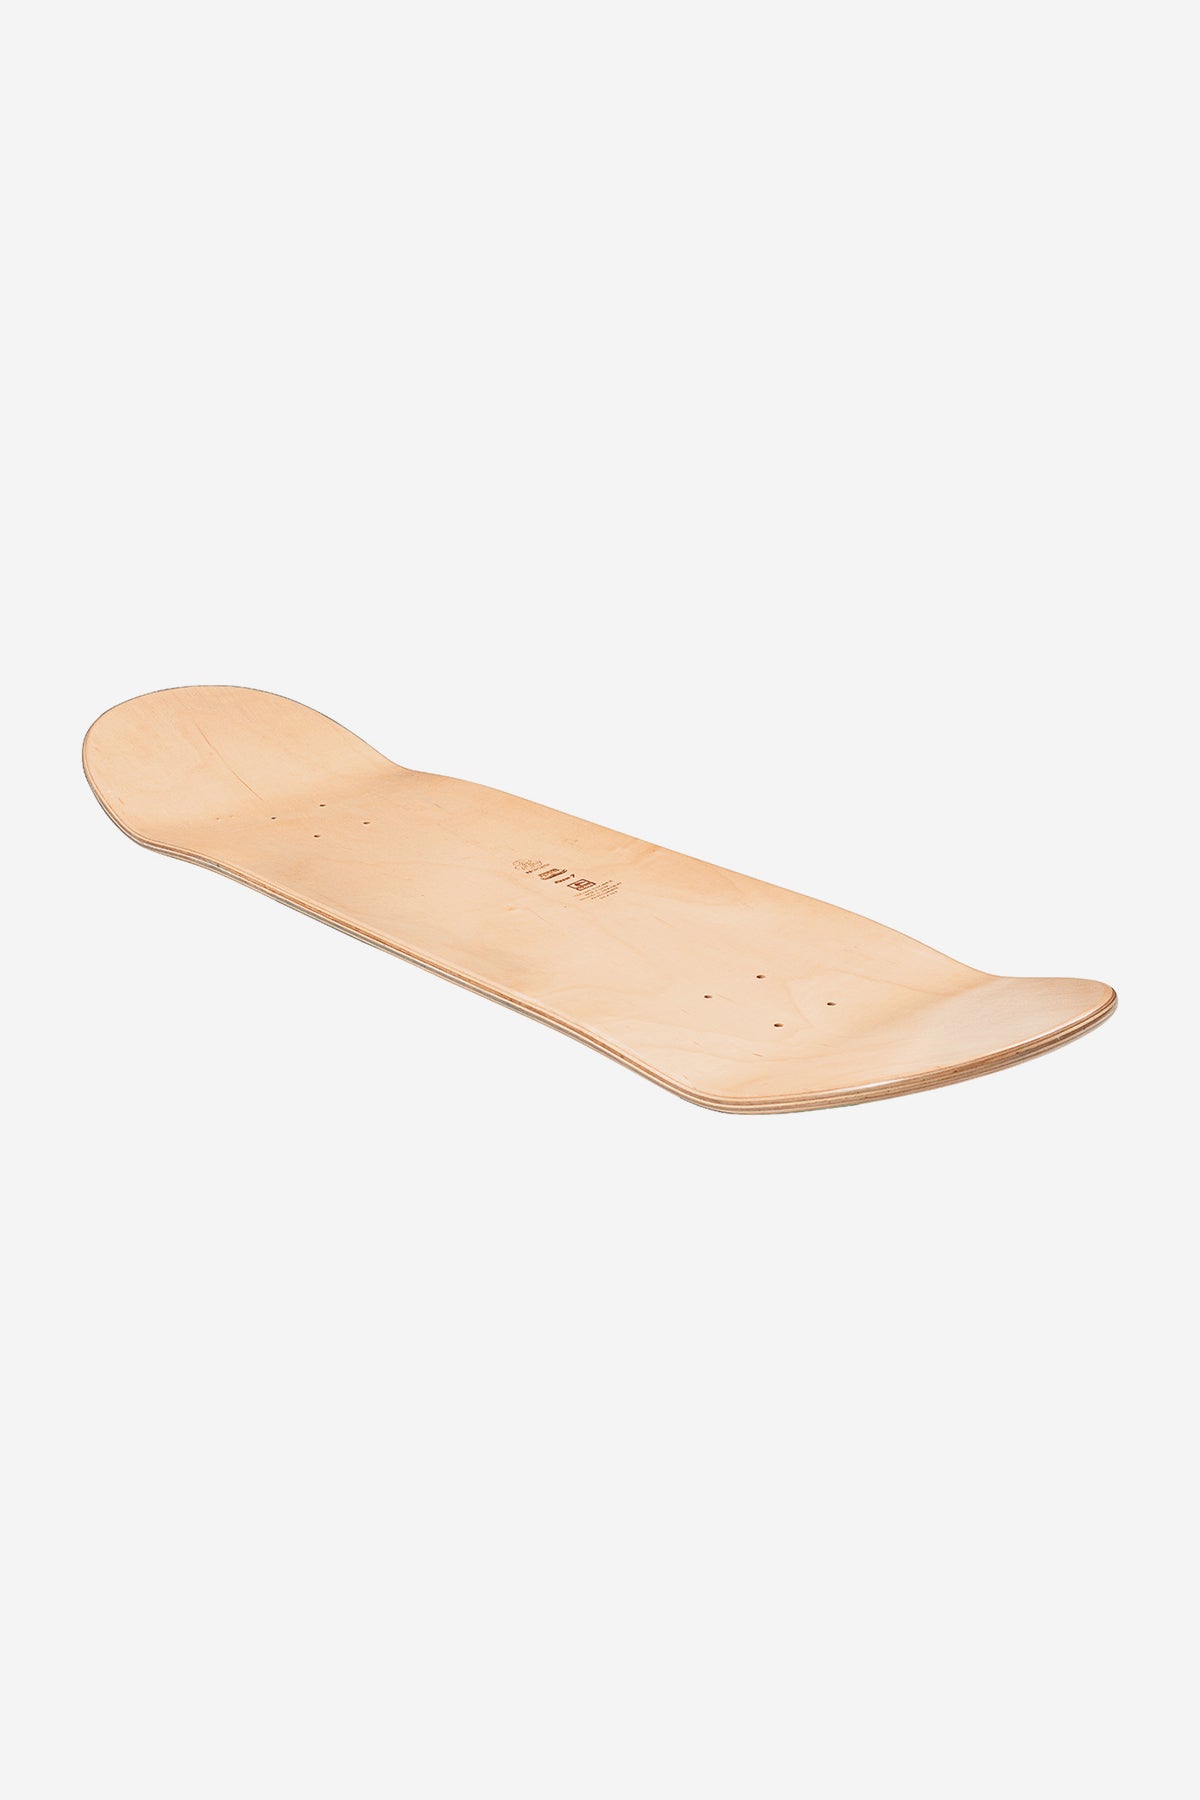 Globe - Goodstock - Noir - 8,125" (en anglais) Skateboard Deck